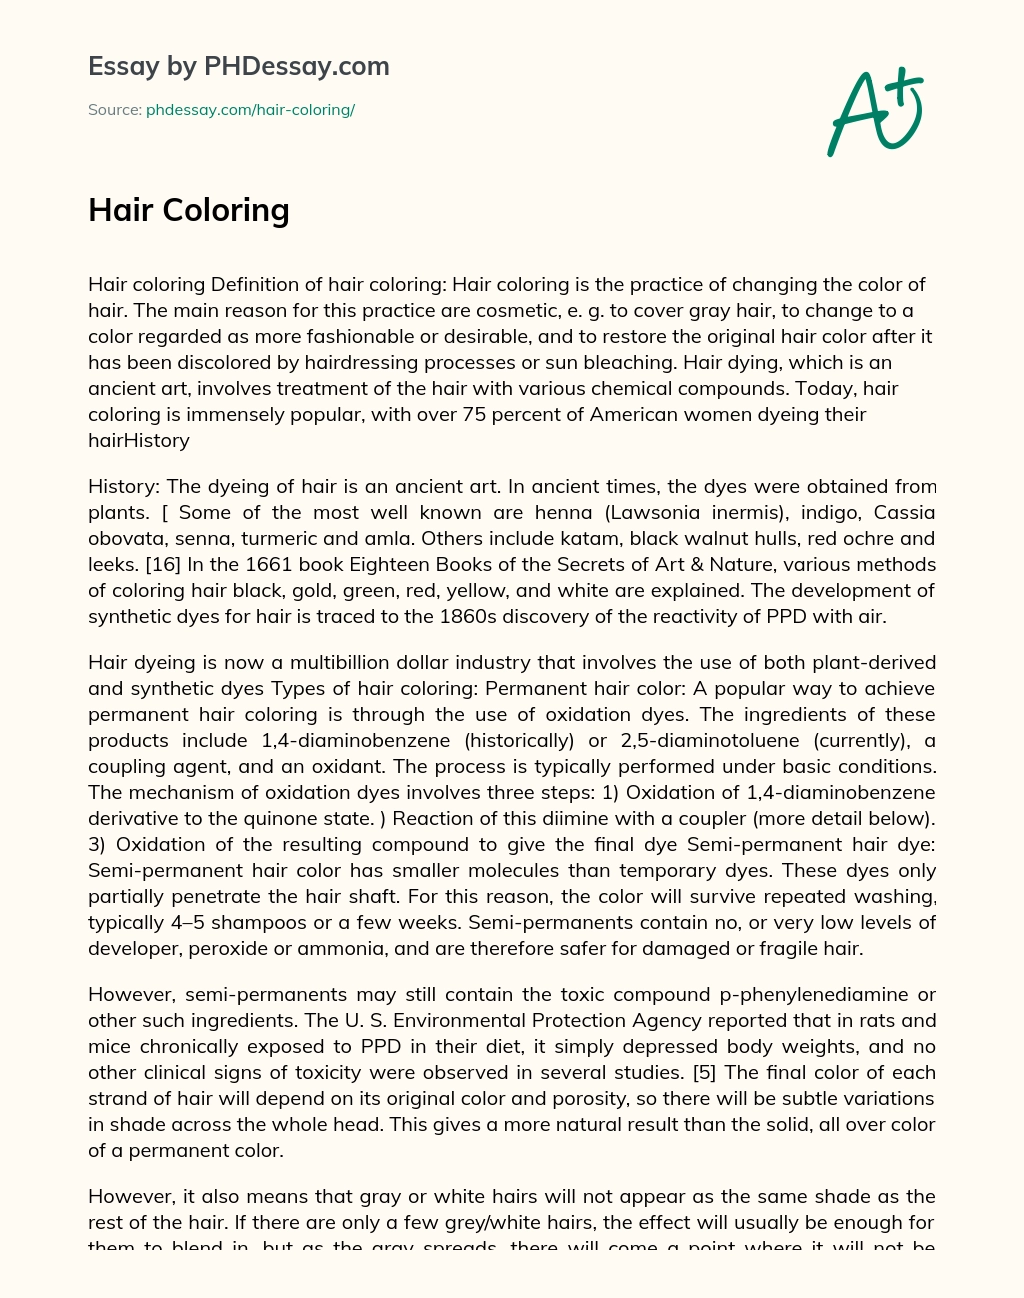 Hair Coloring essay